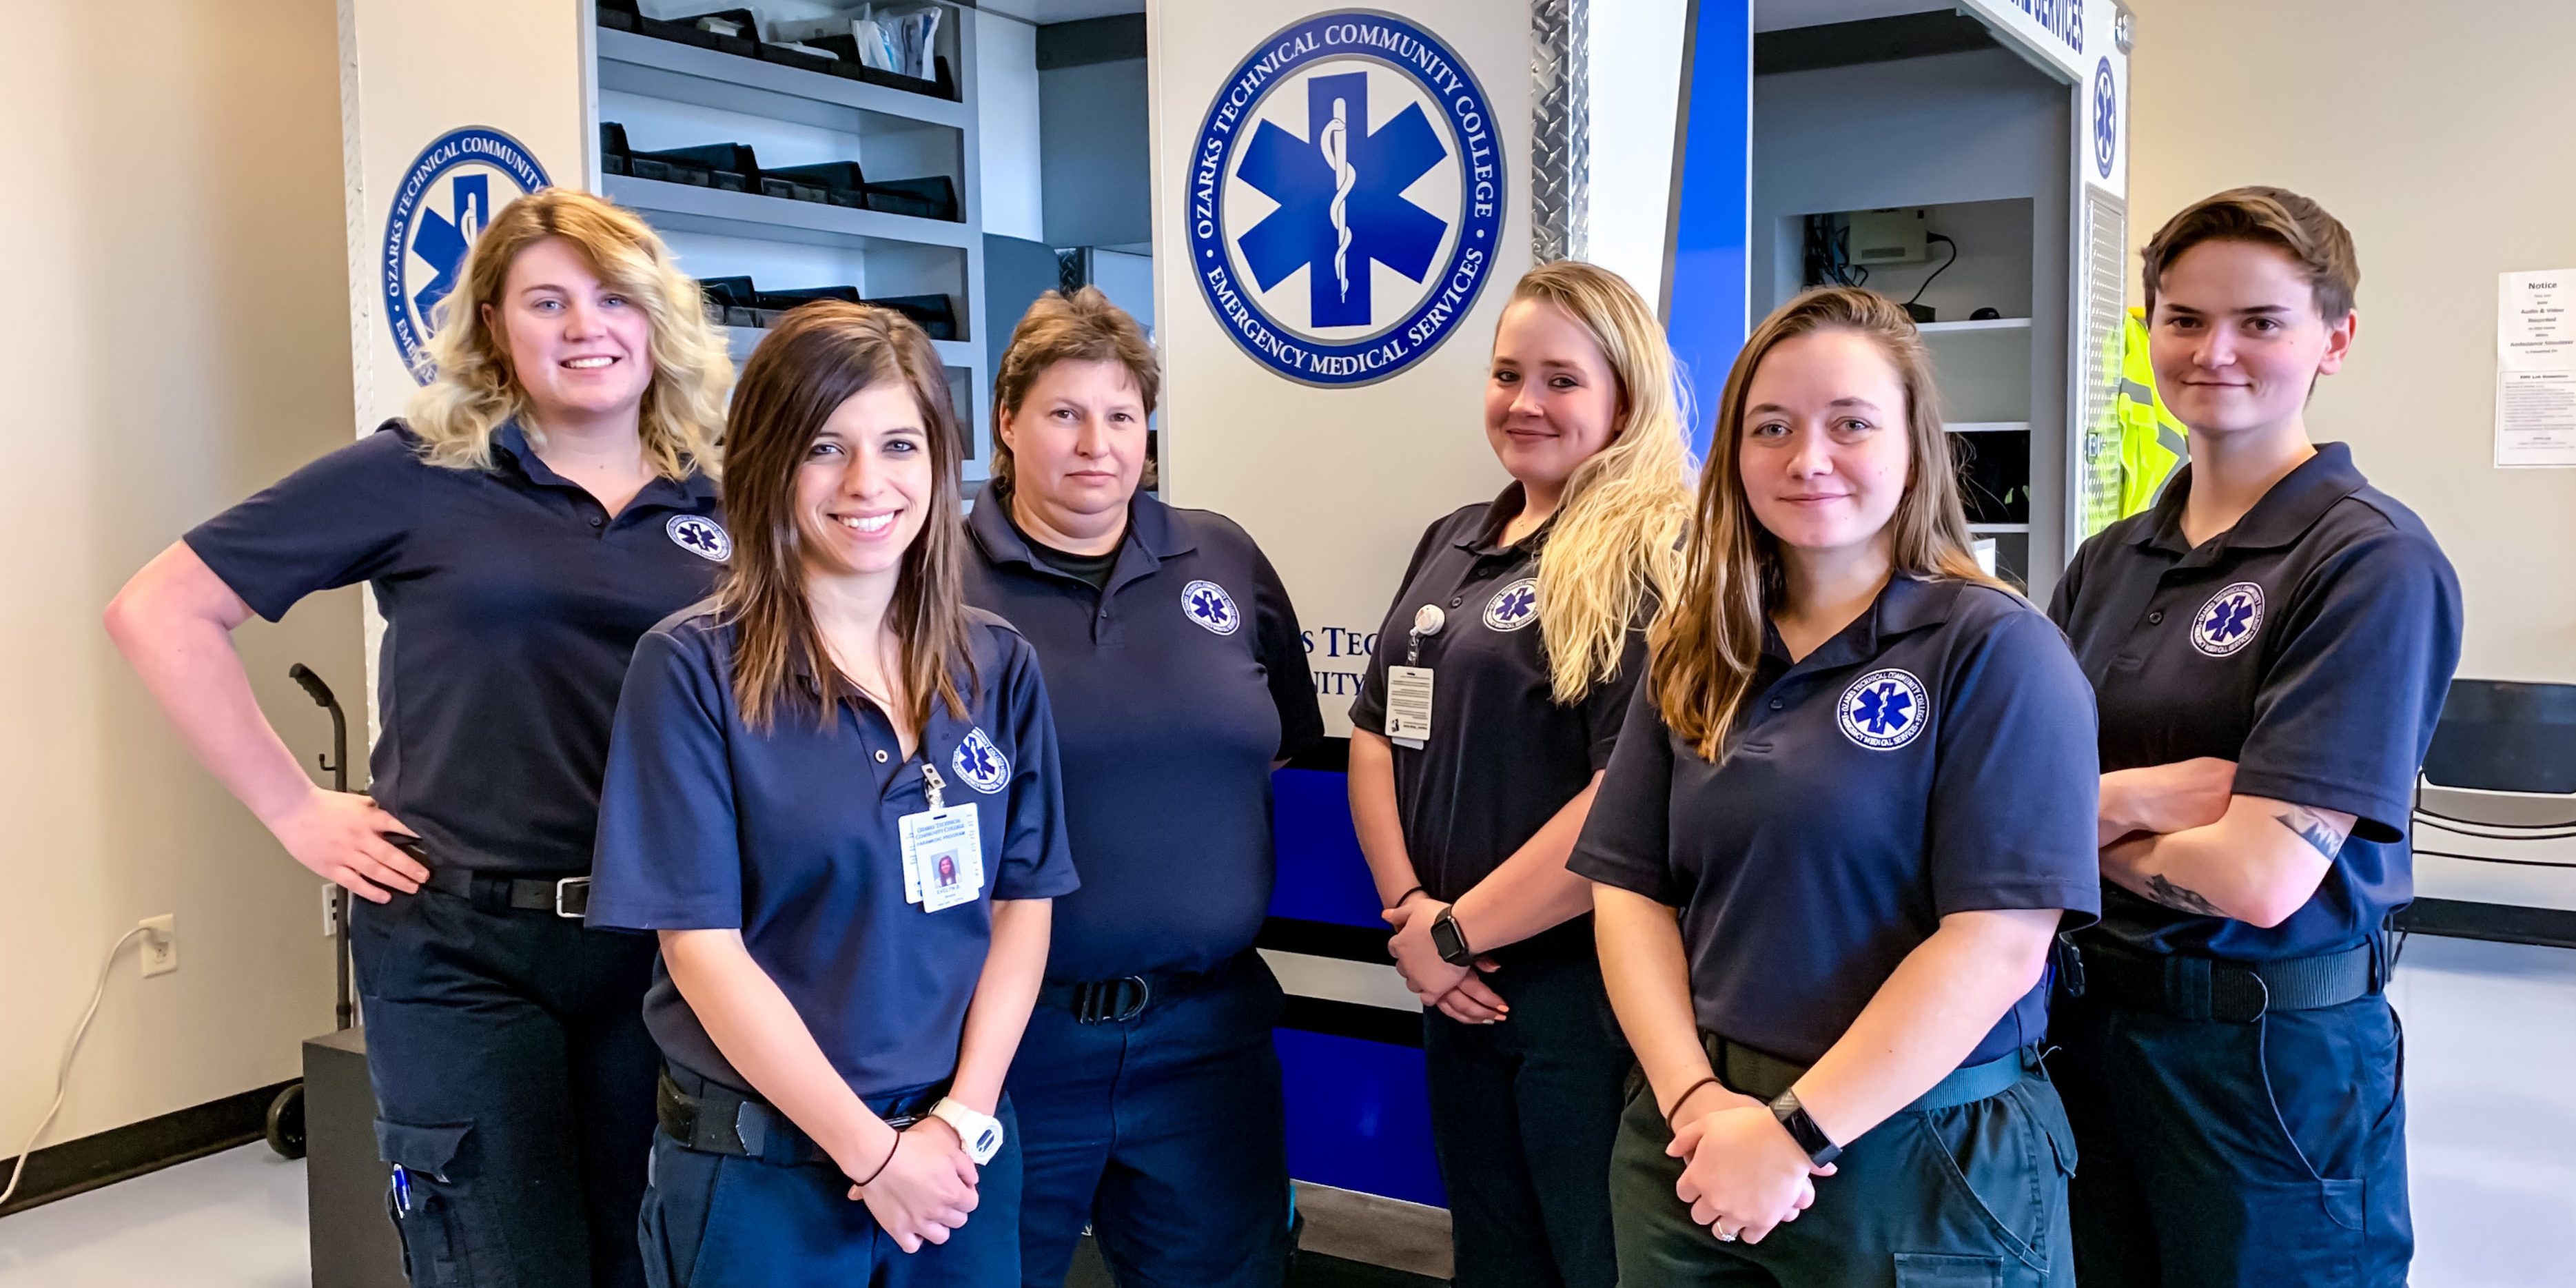 Paramedic Uniform For Women